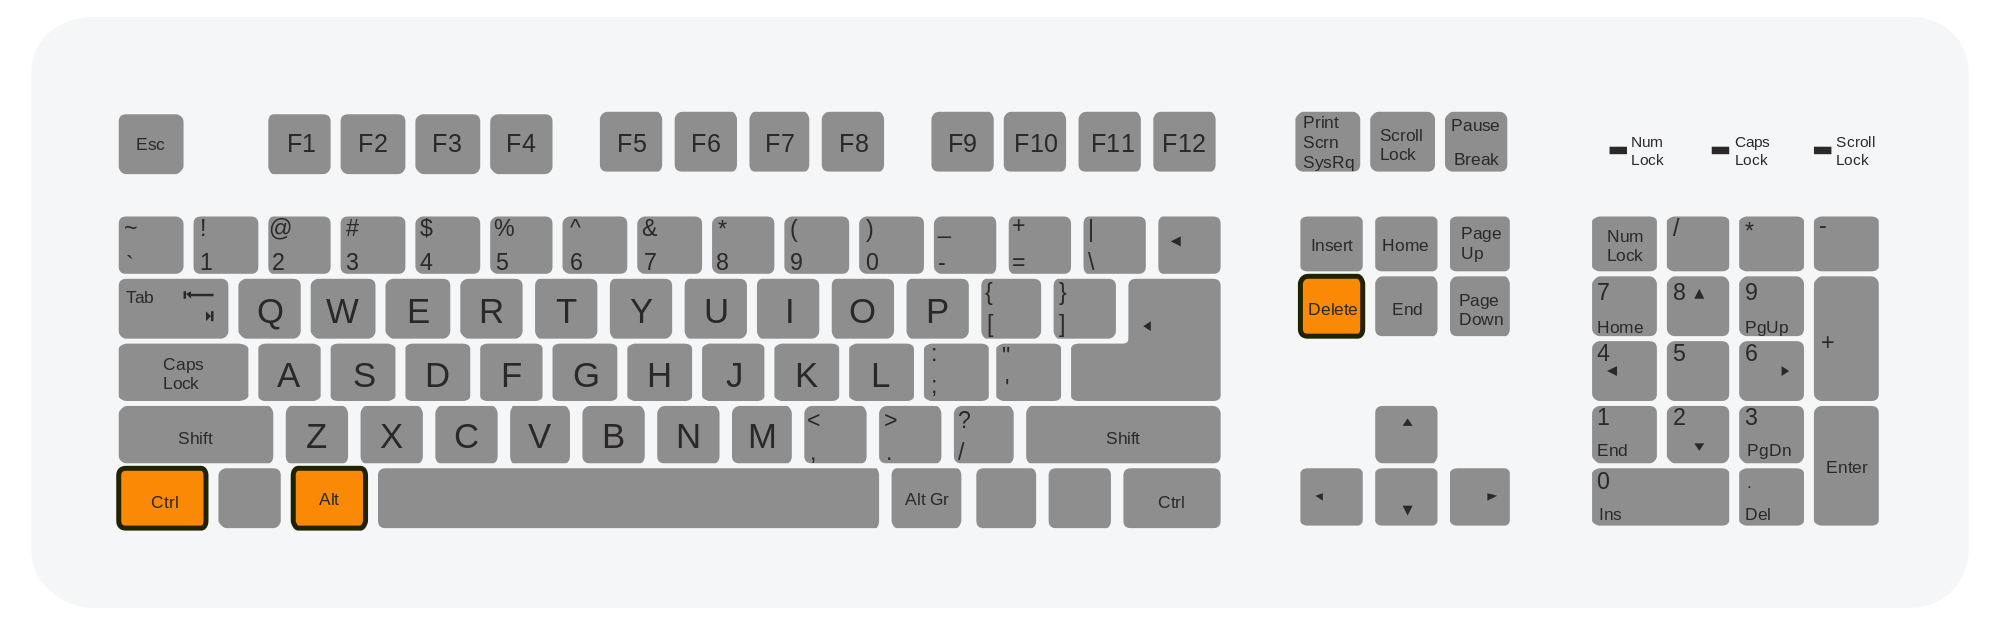 Datei:Klammergriff-tastatur.png